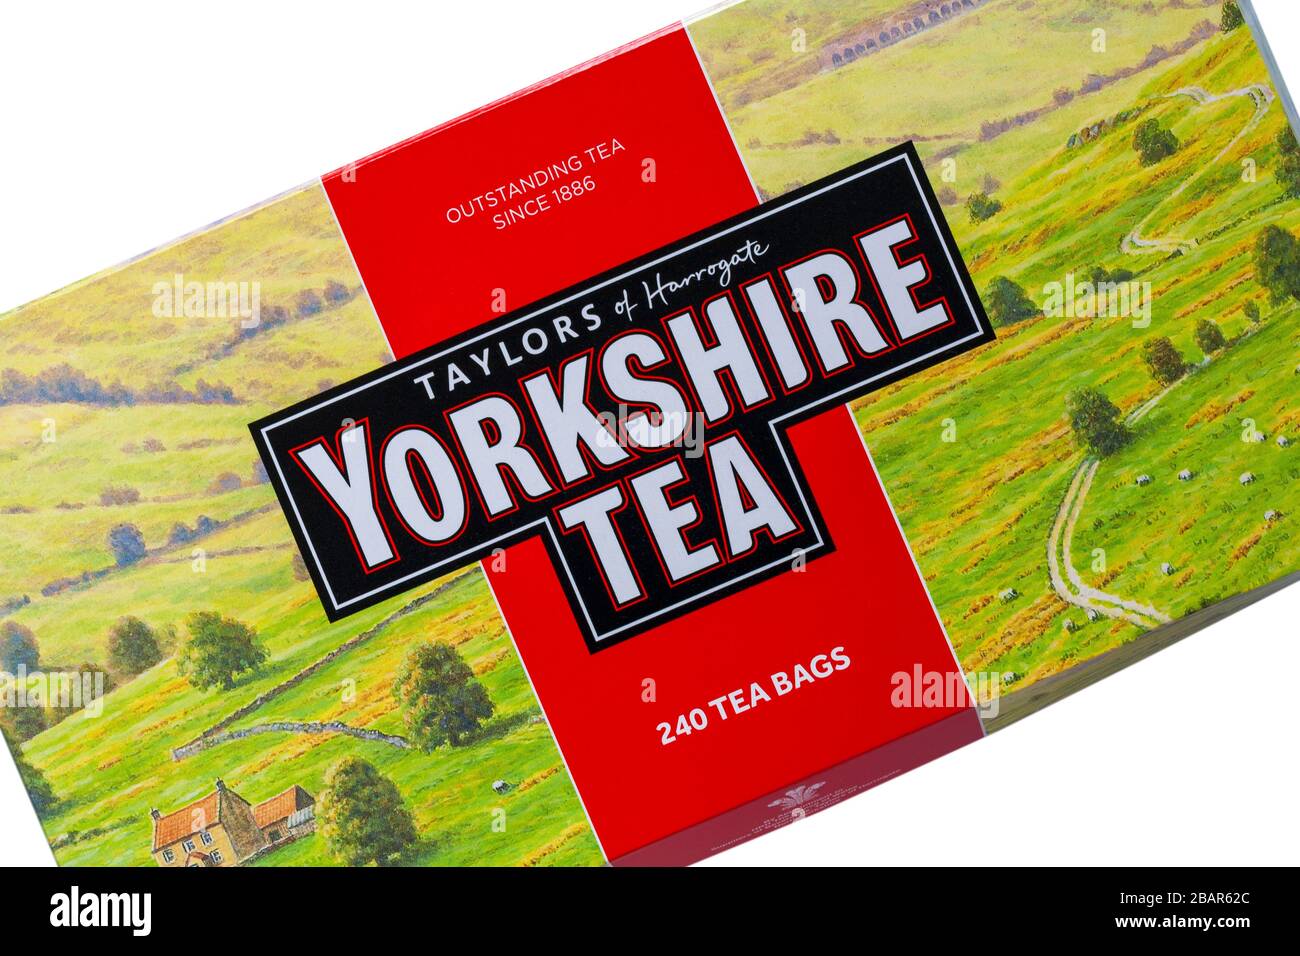 Yorkshire Tea Taylors of Harrogate Yorkshire Red, 240 Teabags